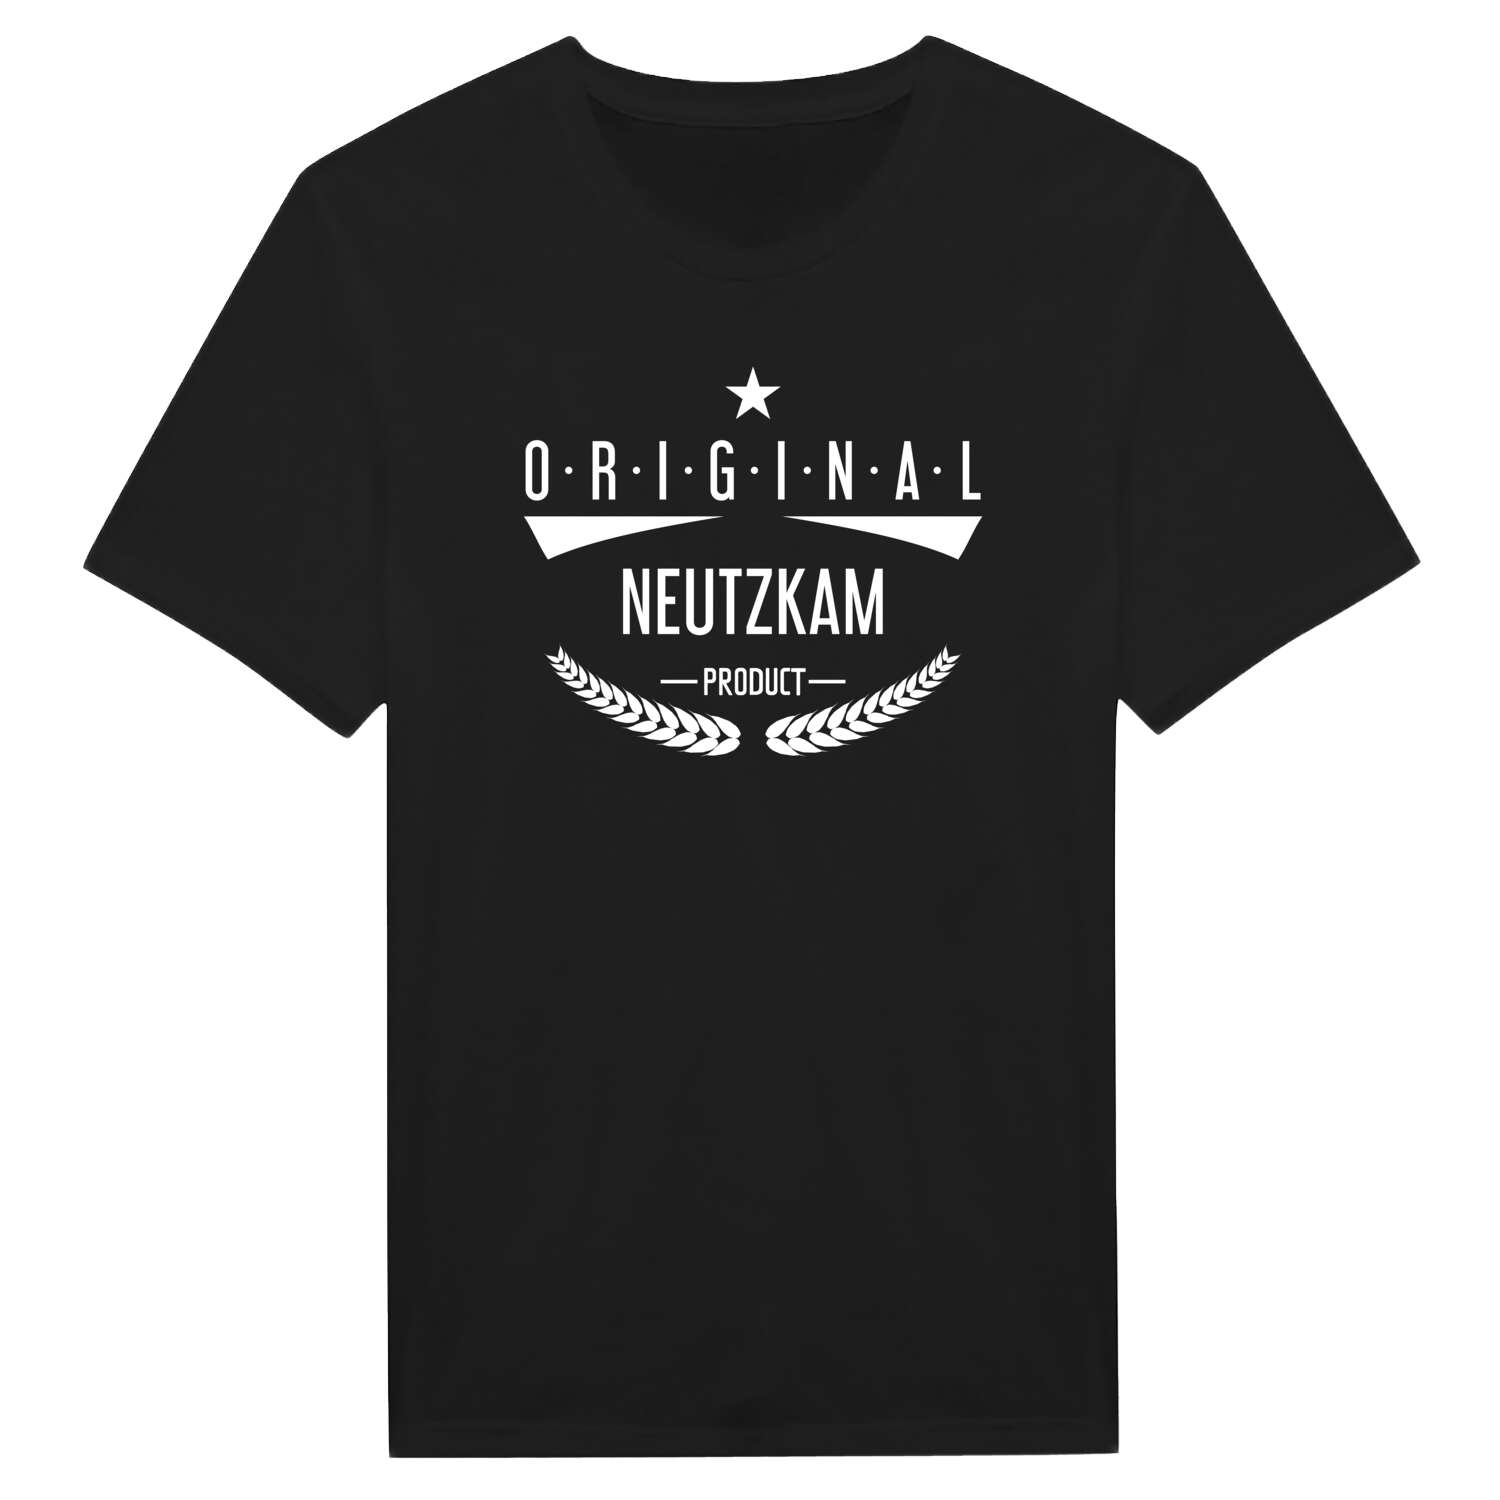 Neutzkam T-Shirt »Original Product«